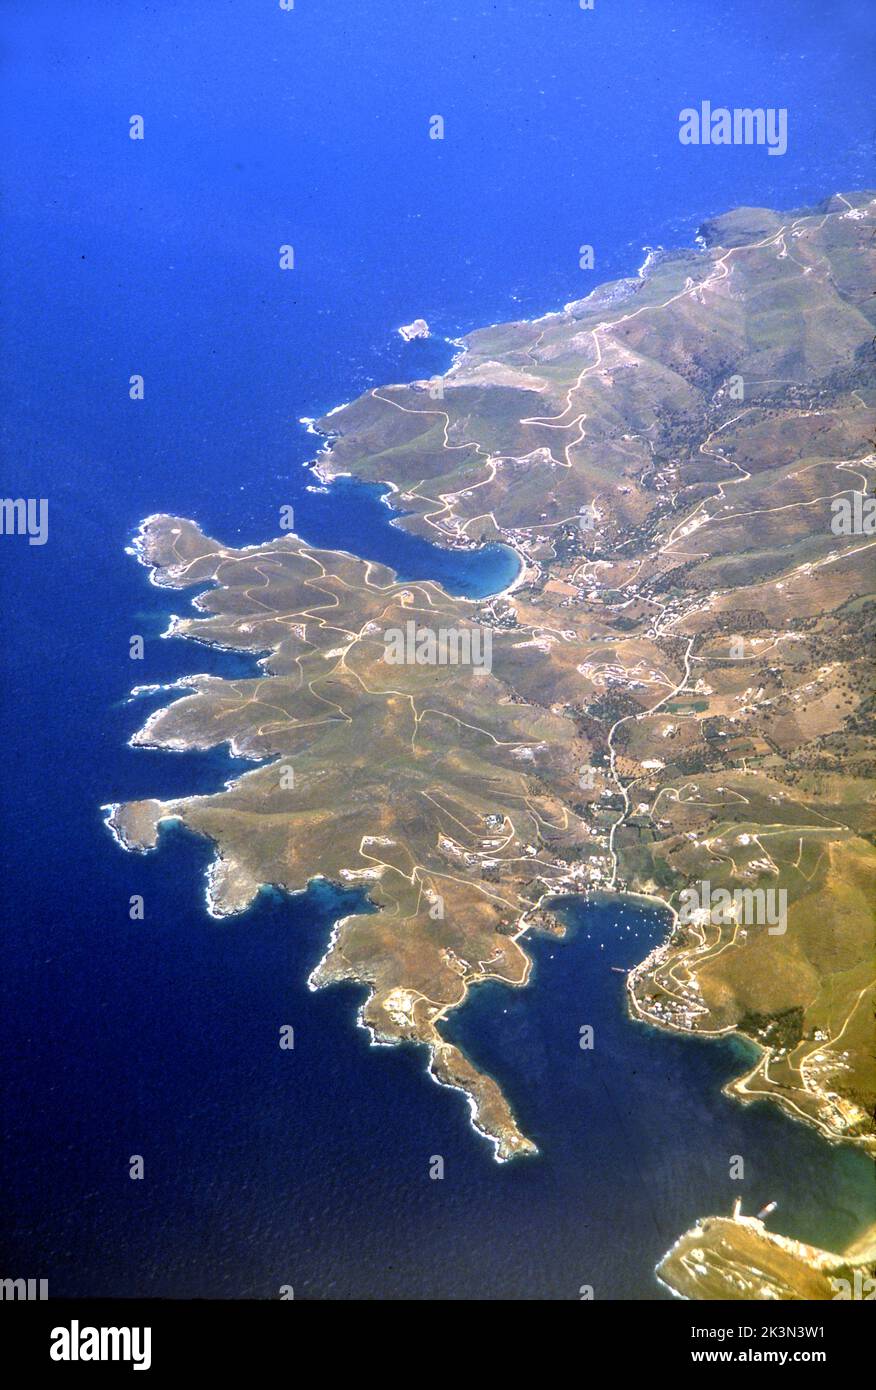 Aerial view of the Greek island Crete in the Aegean Sea. Stock Photo